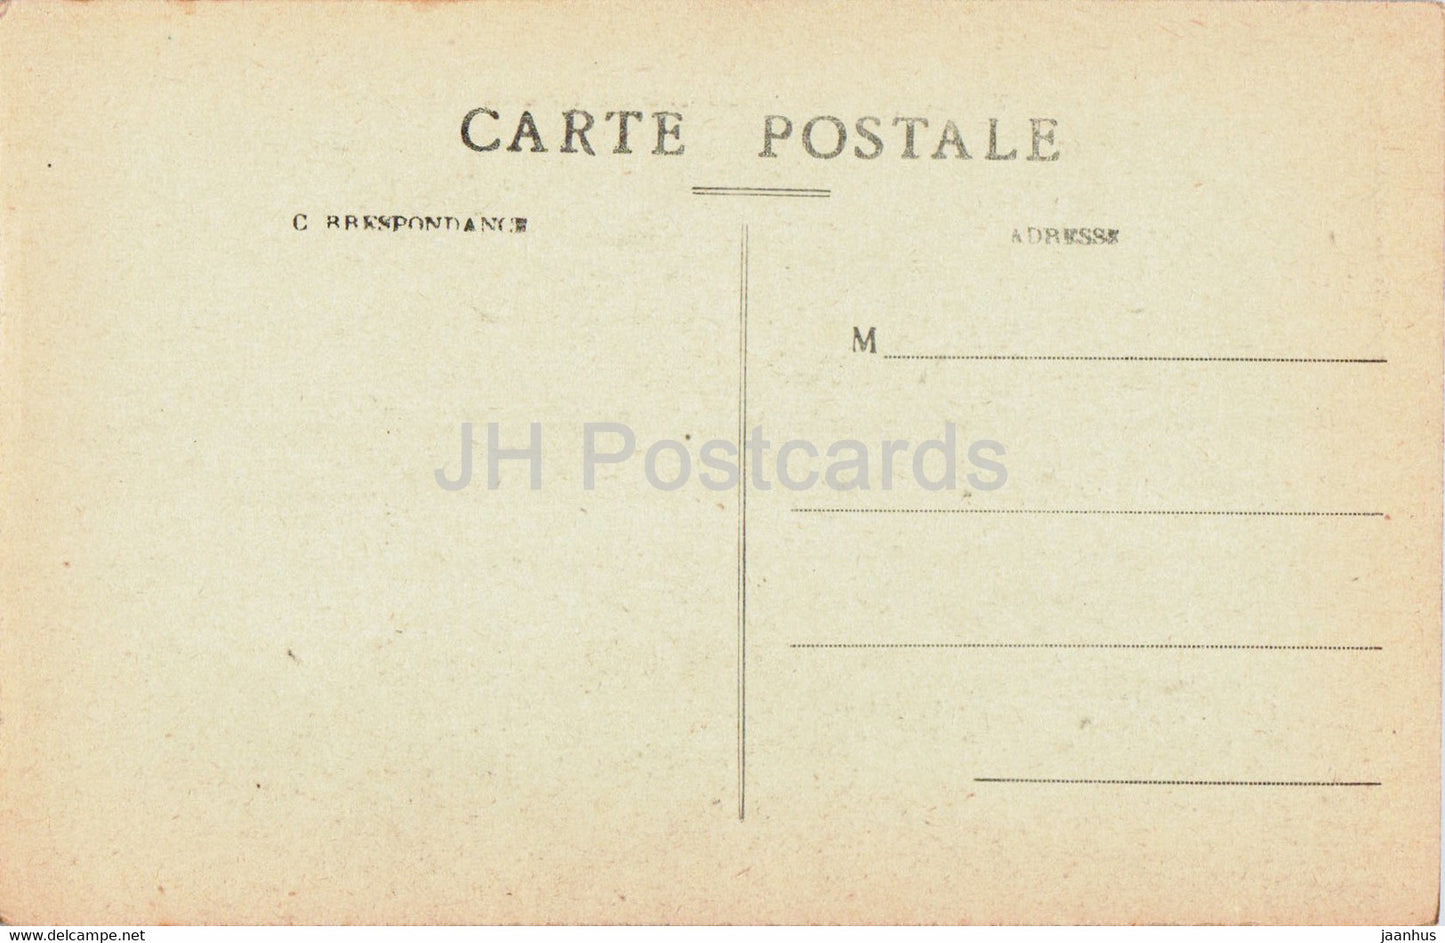 Le Plomb du Cantal - Nos Montagnes - 1831 - old postcard - France - unused